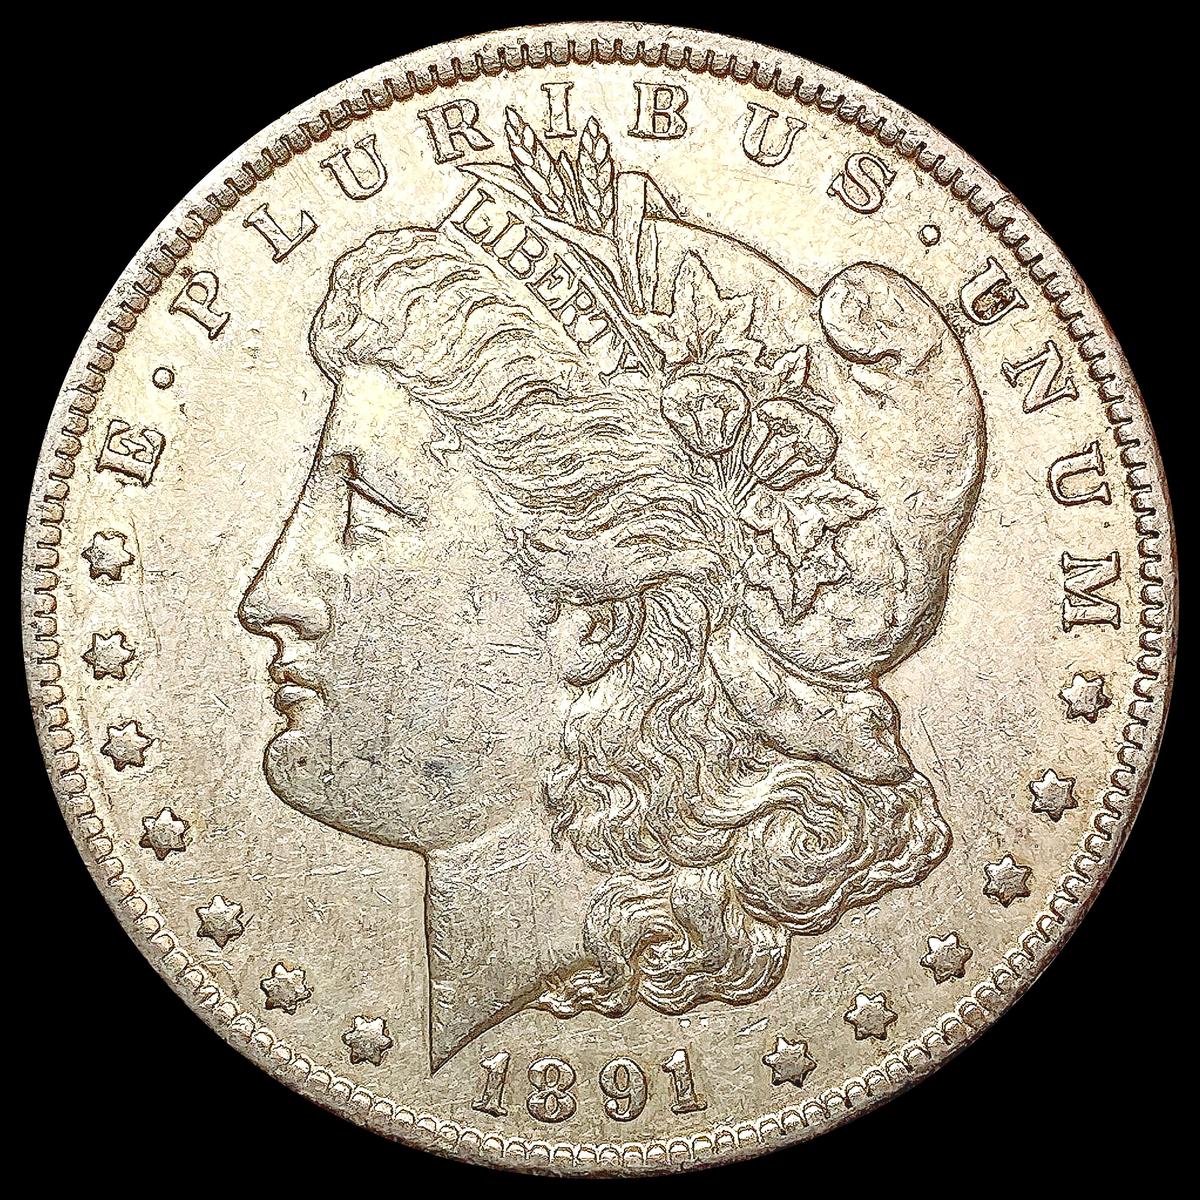 1891-CC Morgan Silver Dollar NEARLY UNCIRCULATED